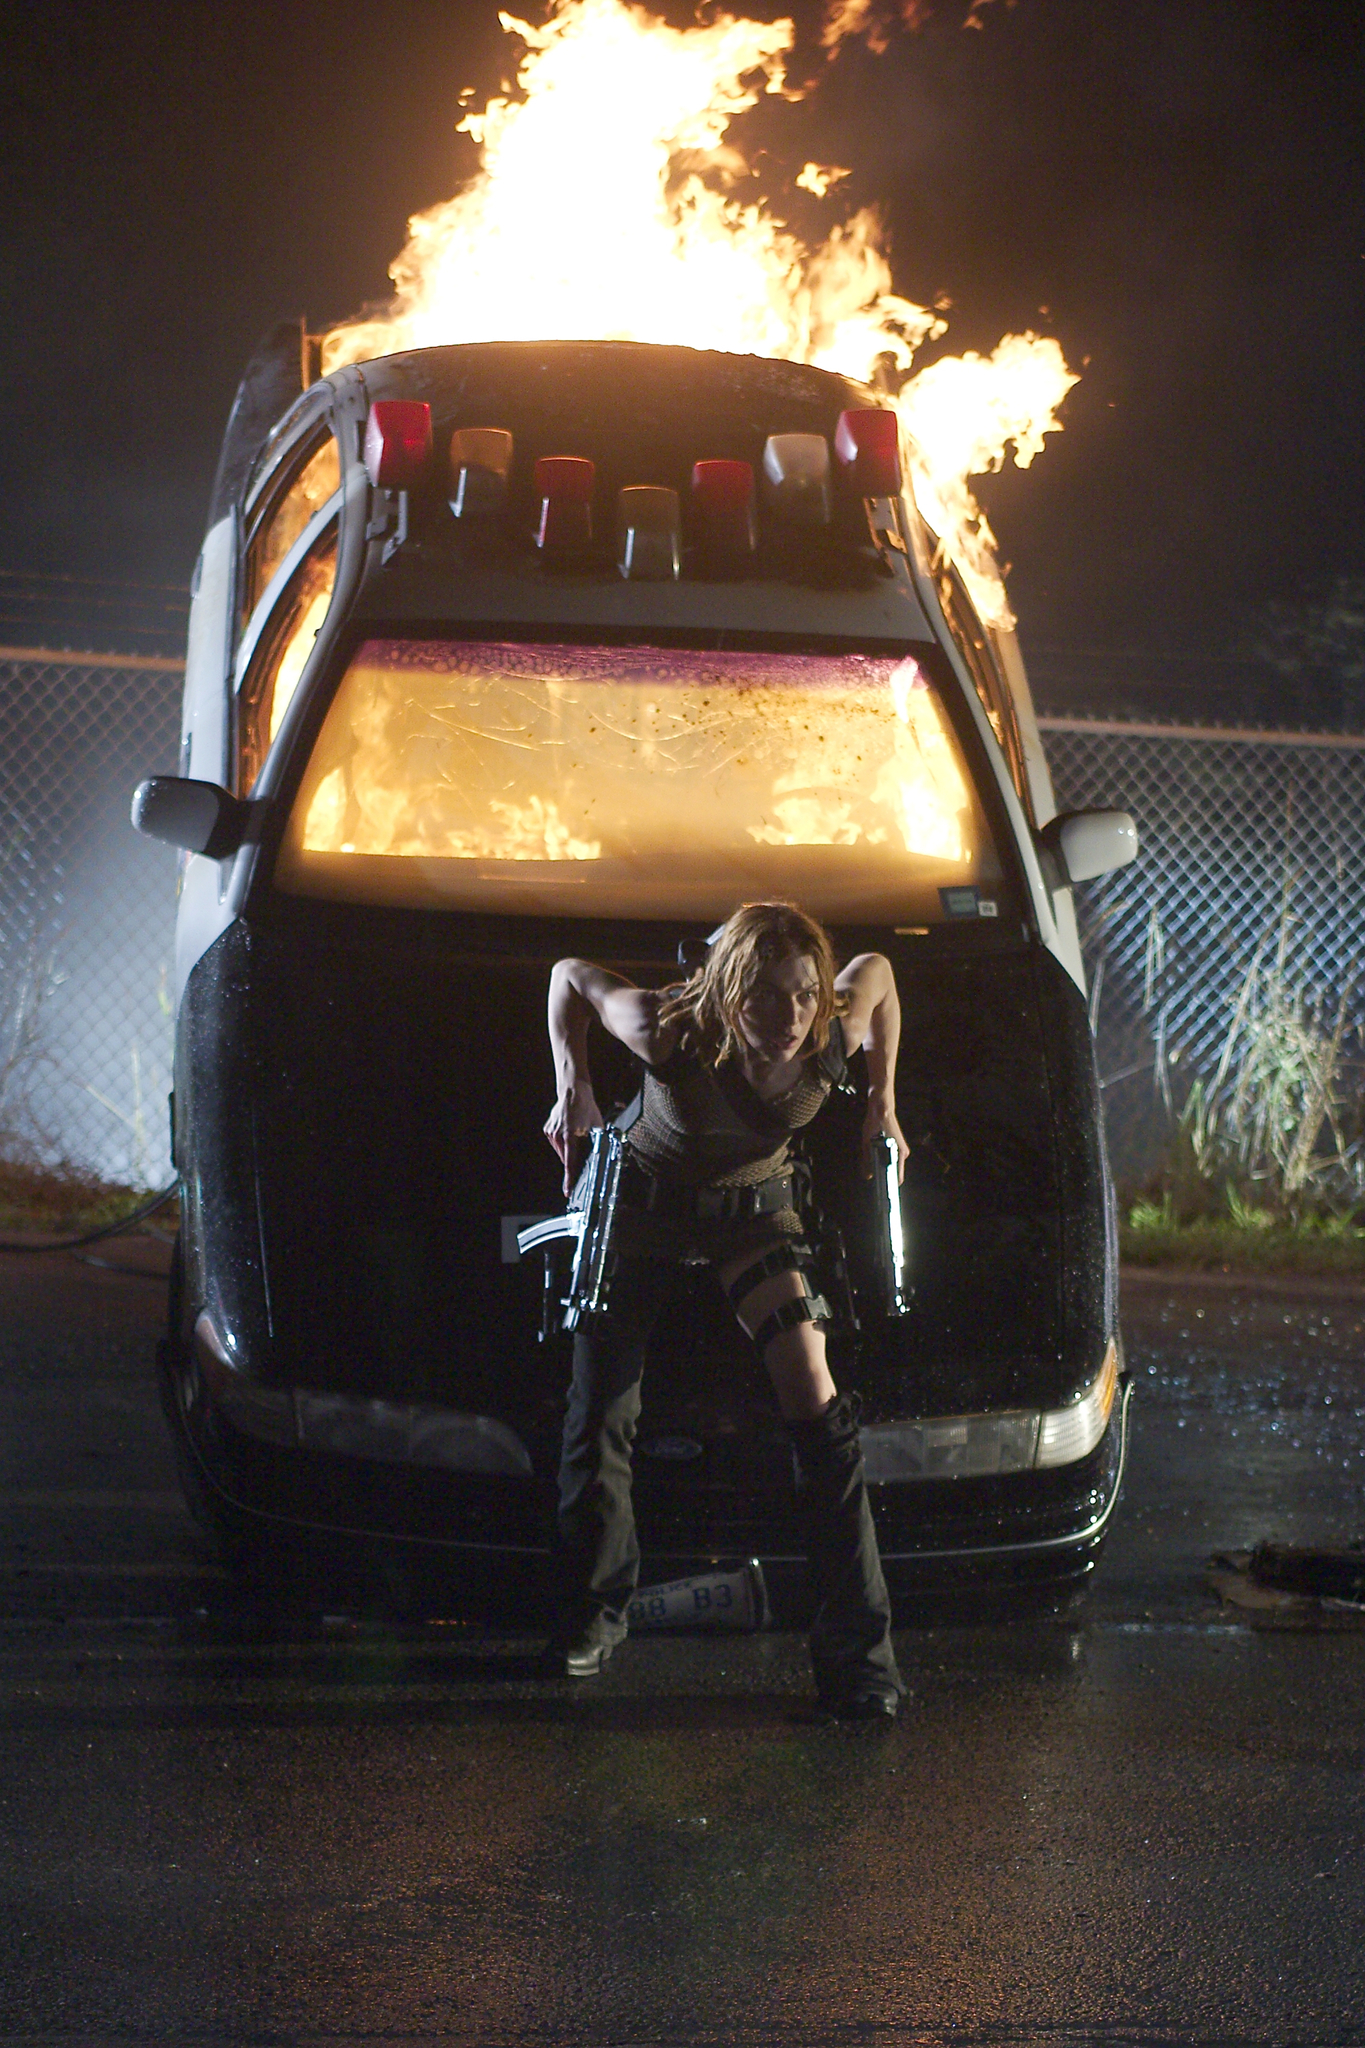 Milla Jovovich in Resident Evil: Apocalypse (2004)